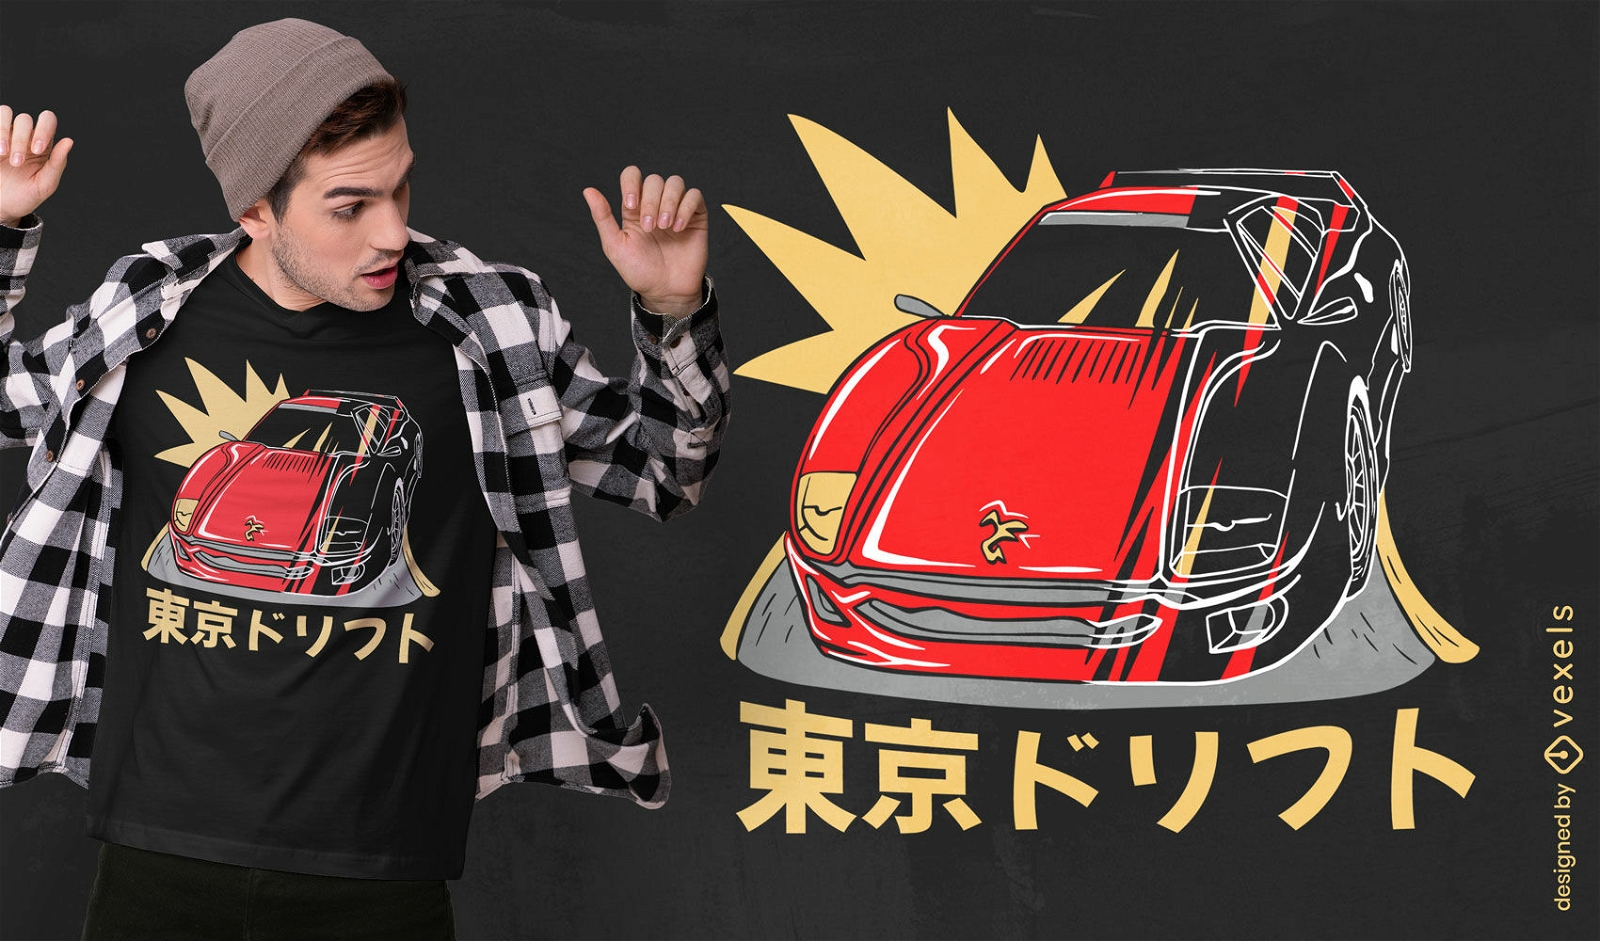 Carro esportivo japon?s e design de camiseta de texto